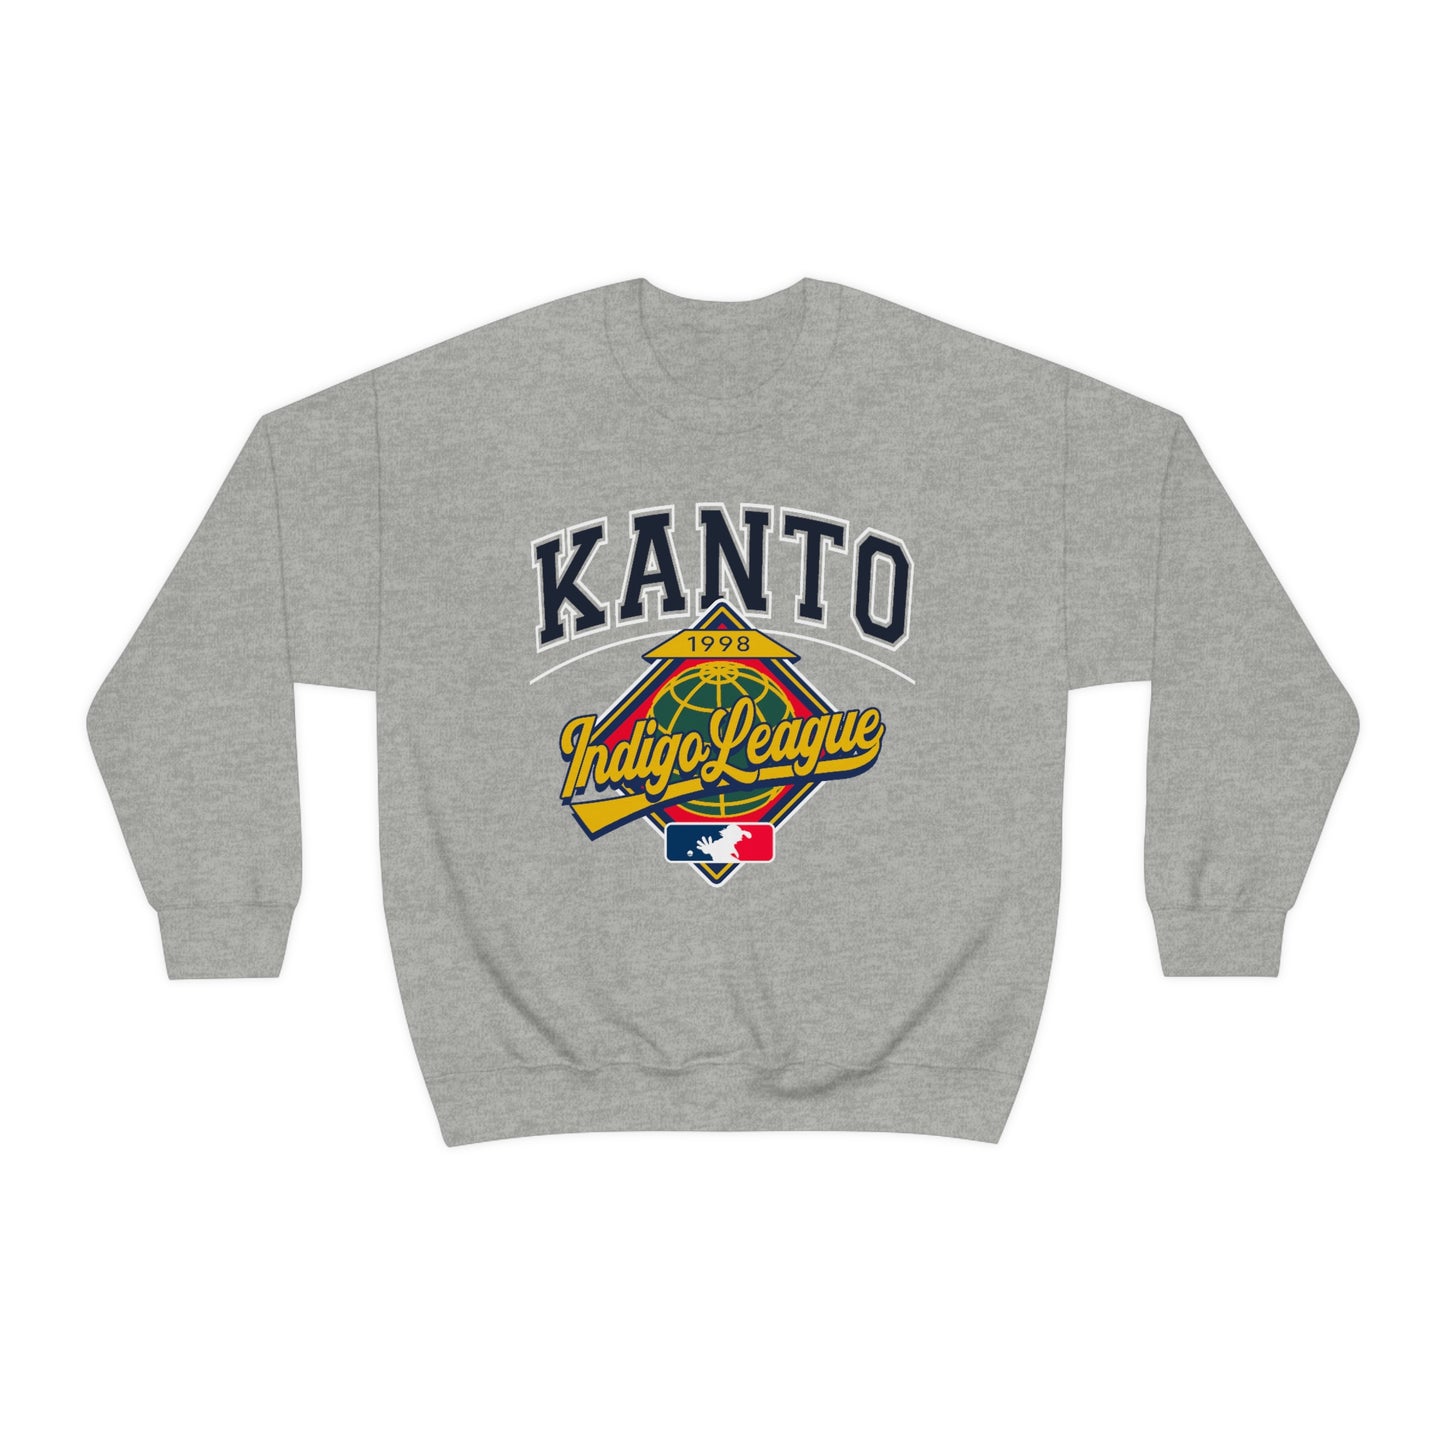 Kanto Champs University sweatshirt College shirt Crewneck Regions Baseball world series inspired 90s